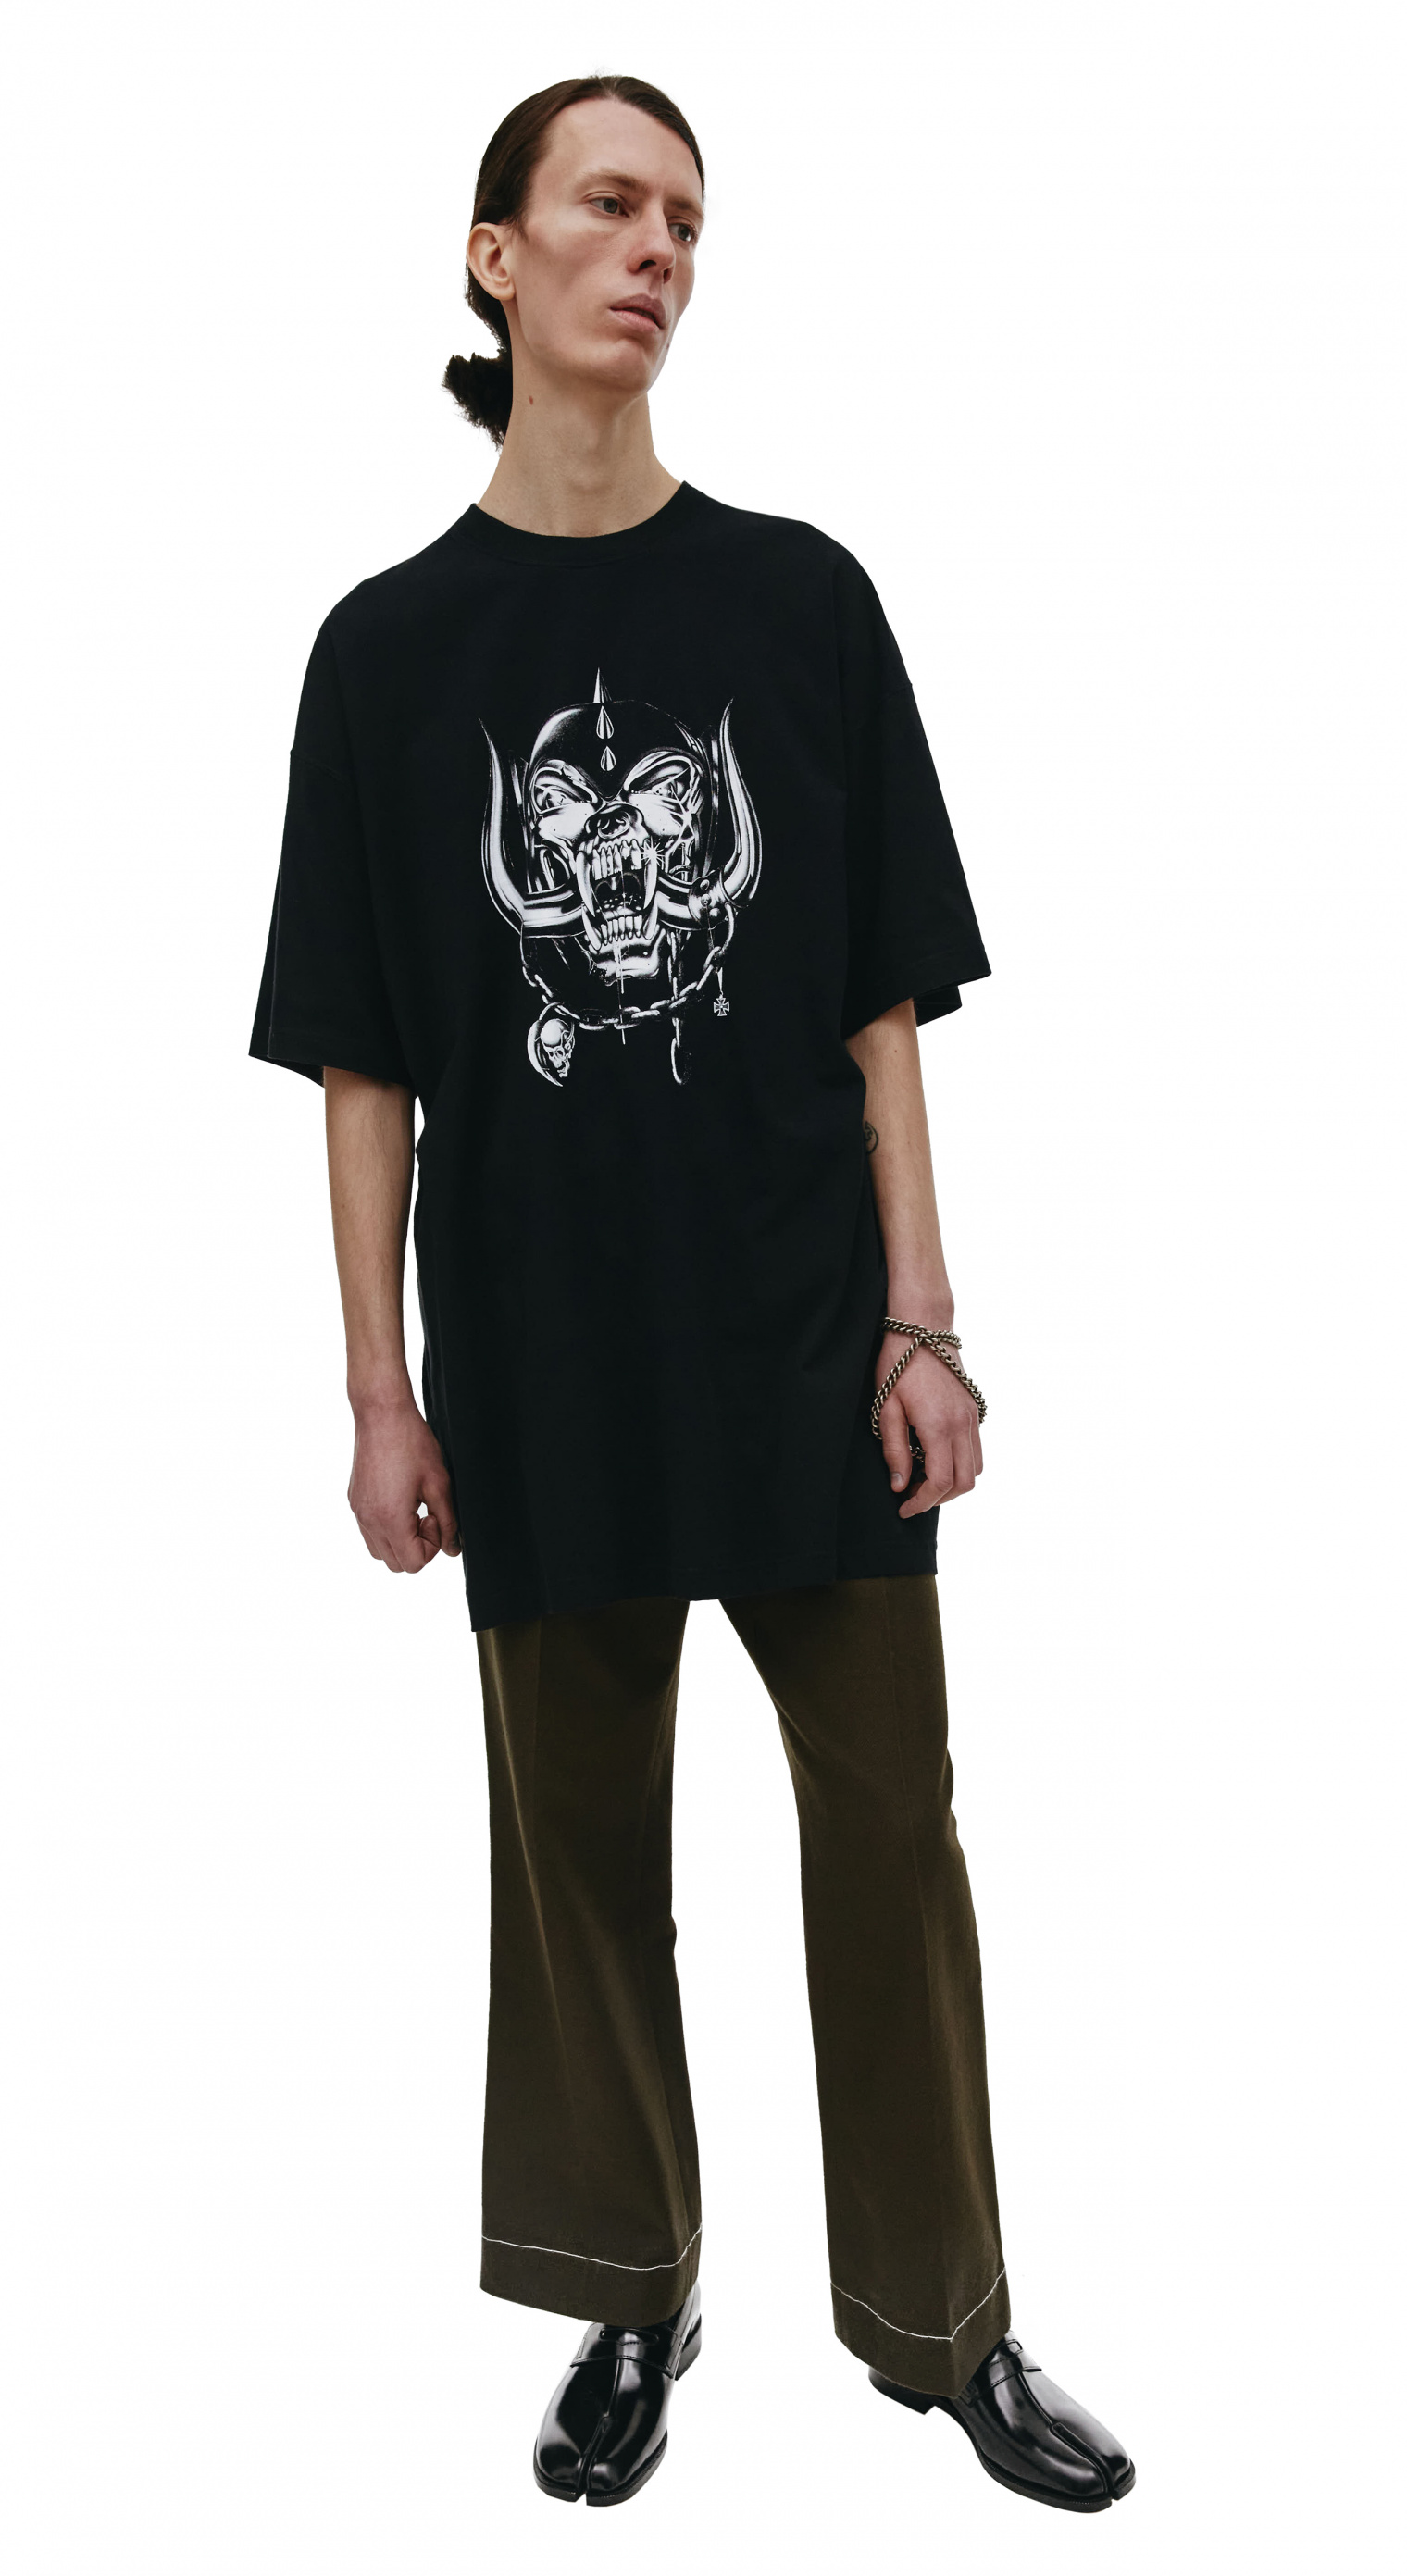 VETEMENTS Motörhead World Tour Printed T-Shirt